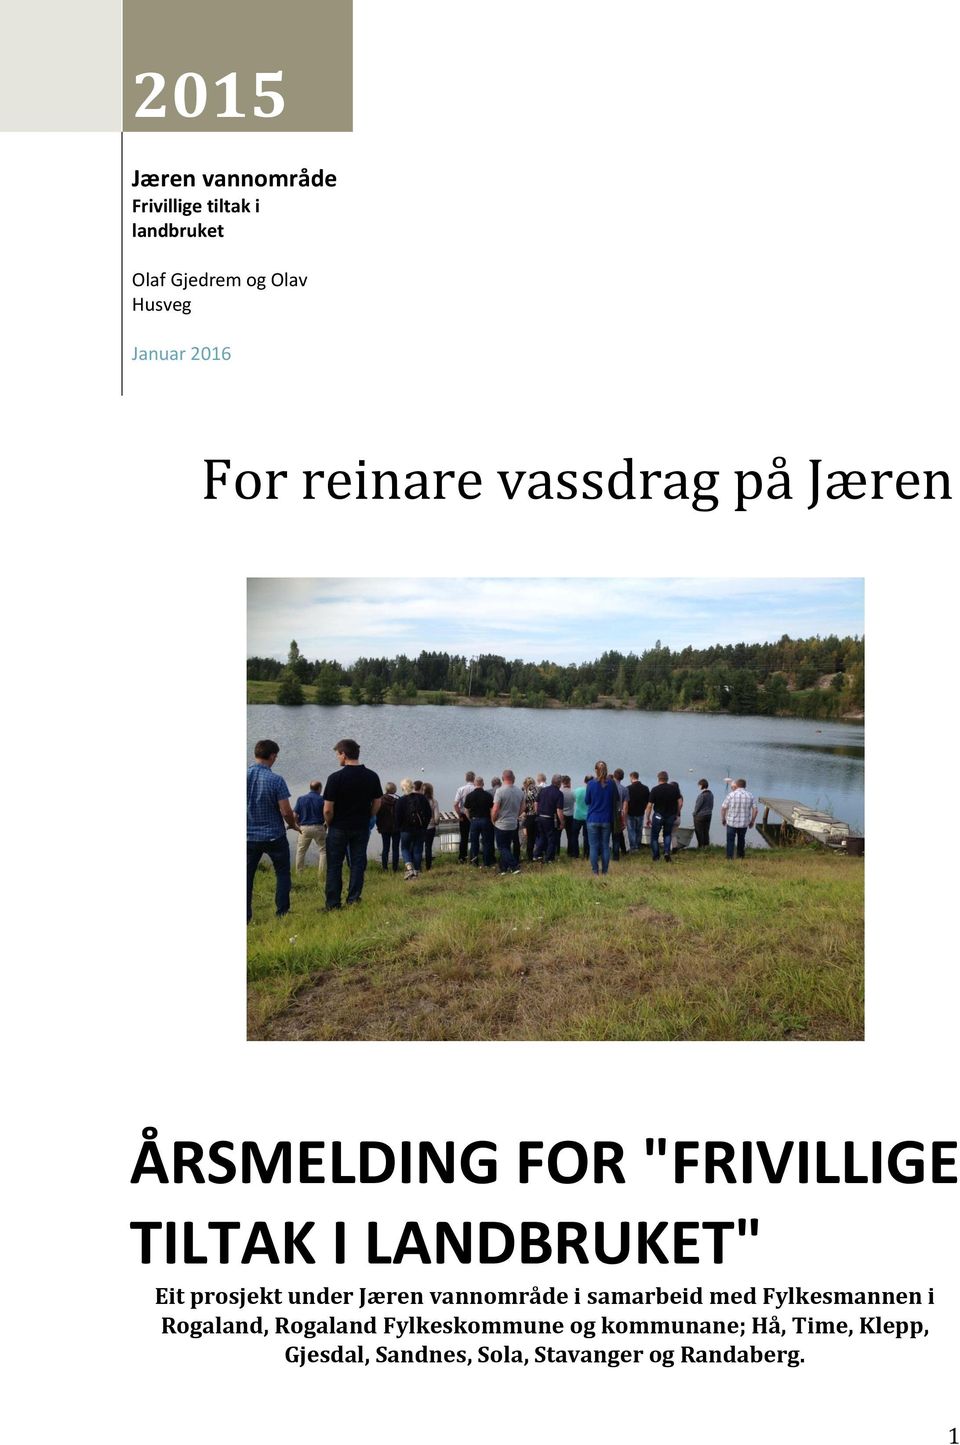 prosjekt under Jæren vannområde i samarbeid med Fylkesmannen i Rogaland, Rogaland